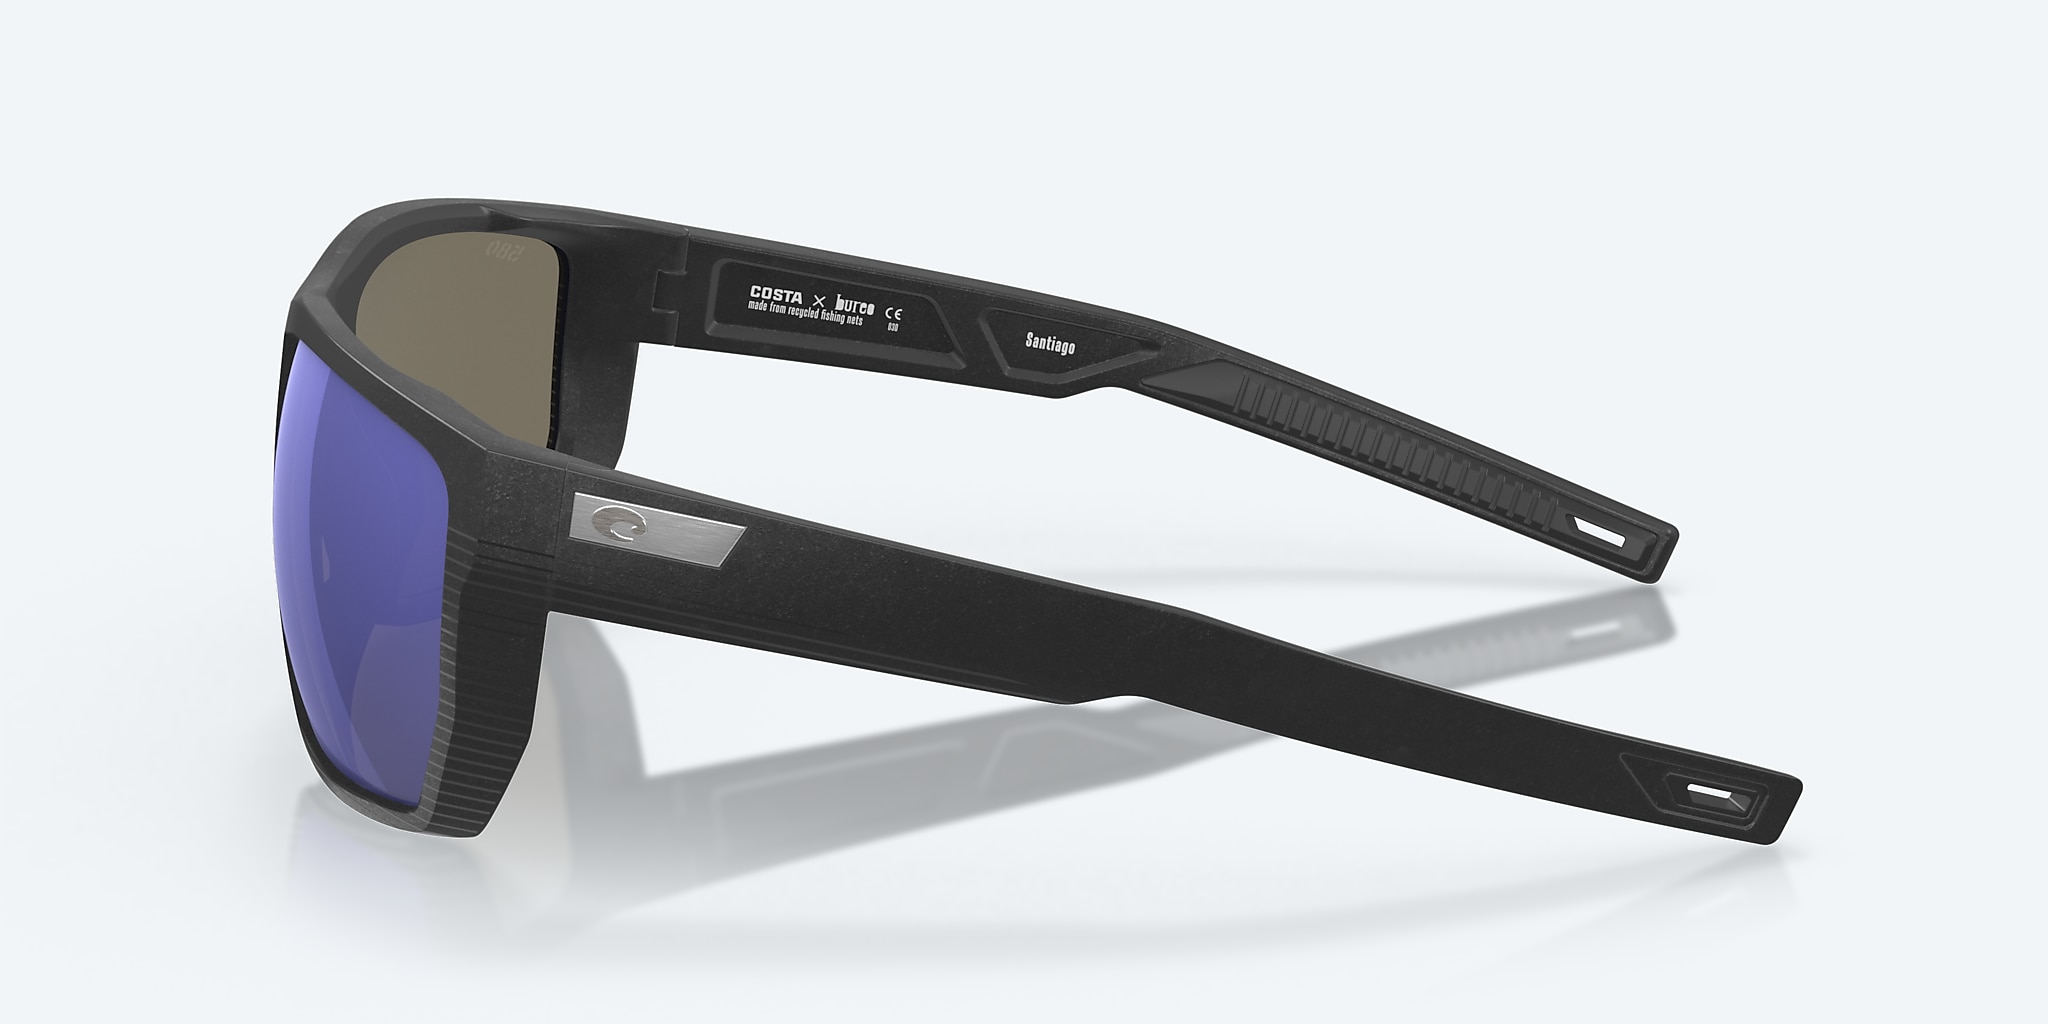 COSTA 6S9085 Santiago Net Black - Man Sunglasses, Blue Mirror Lens